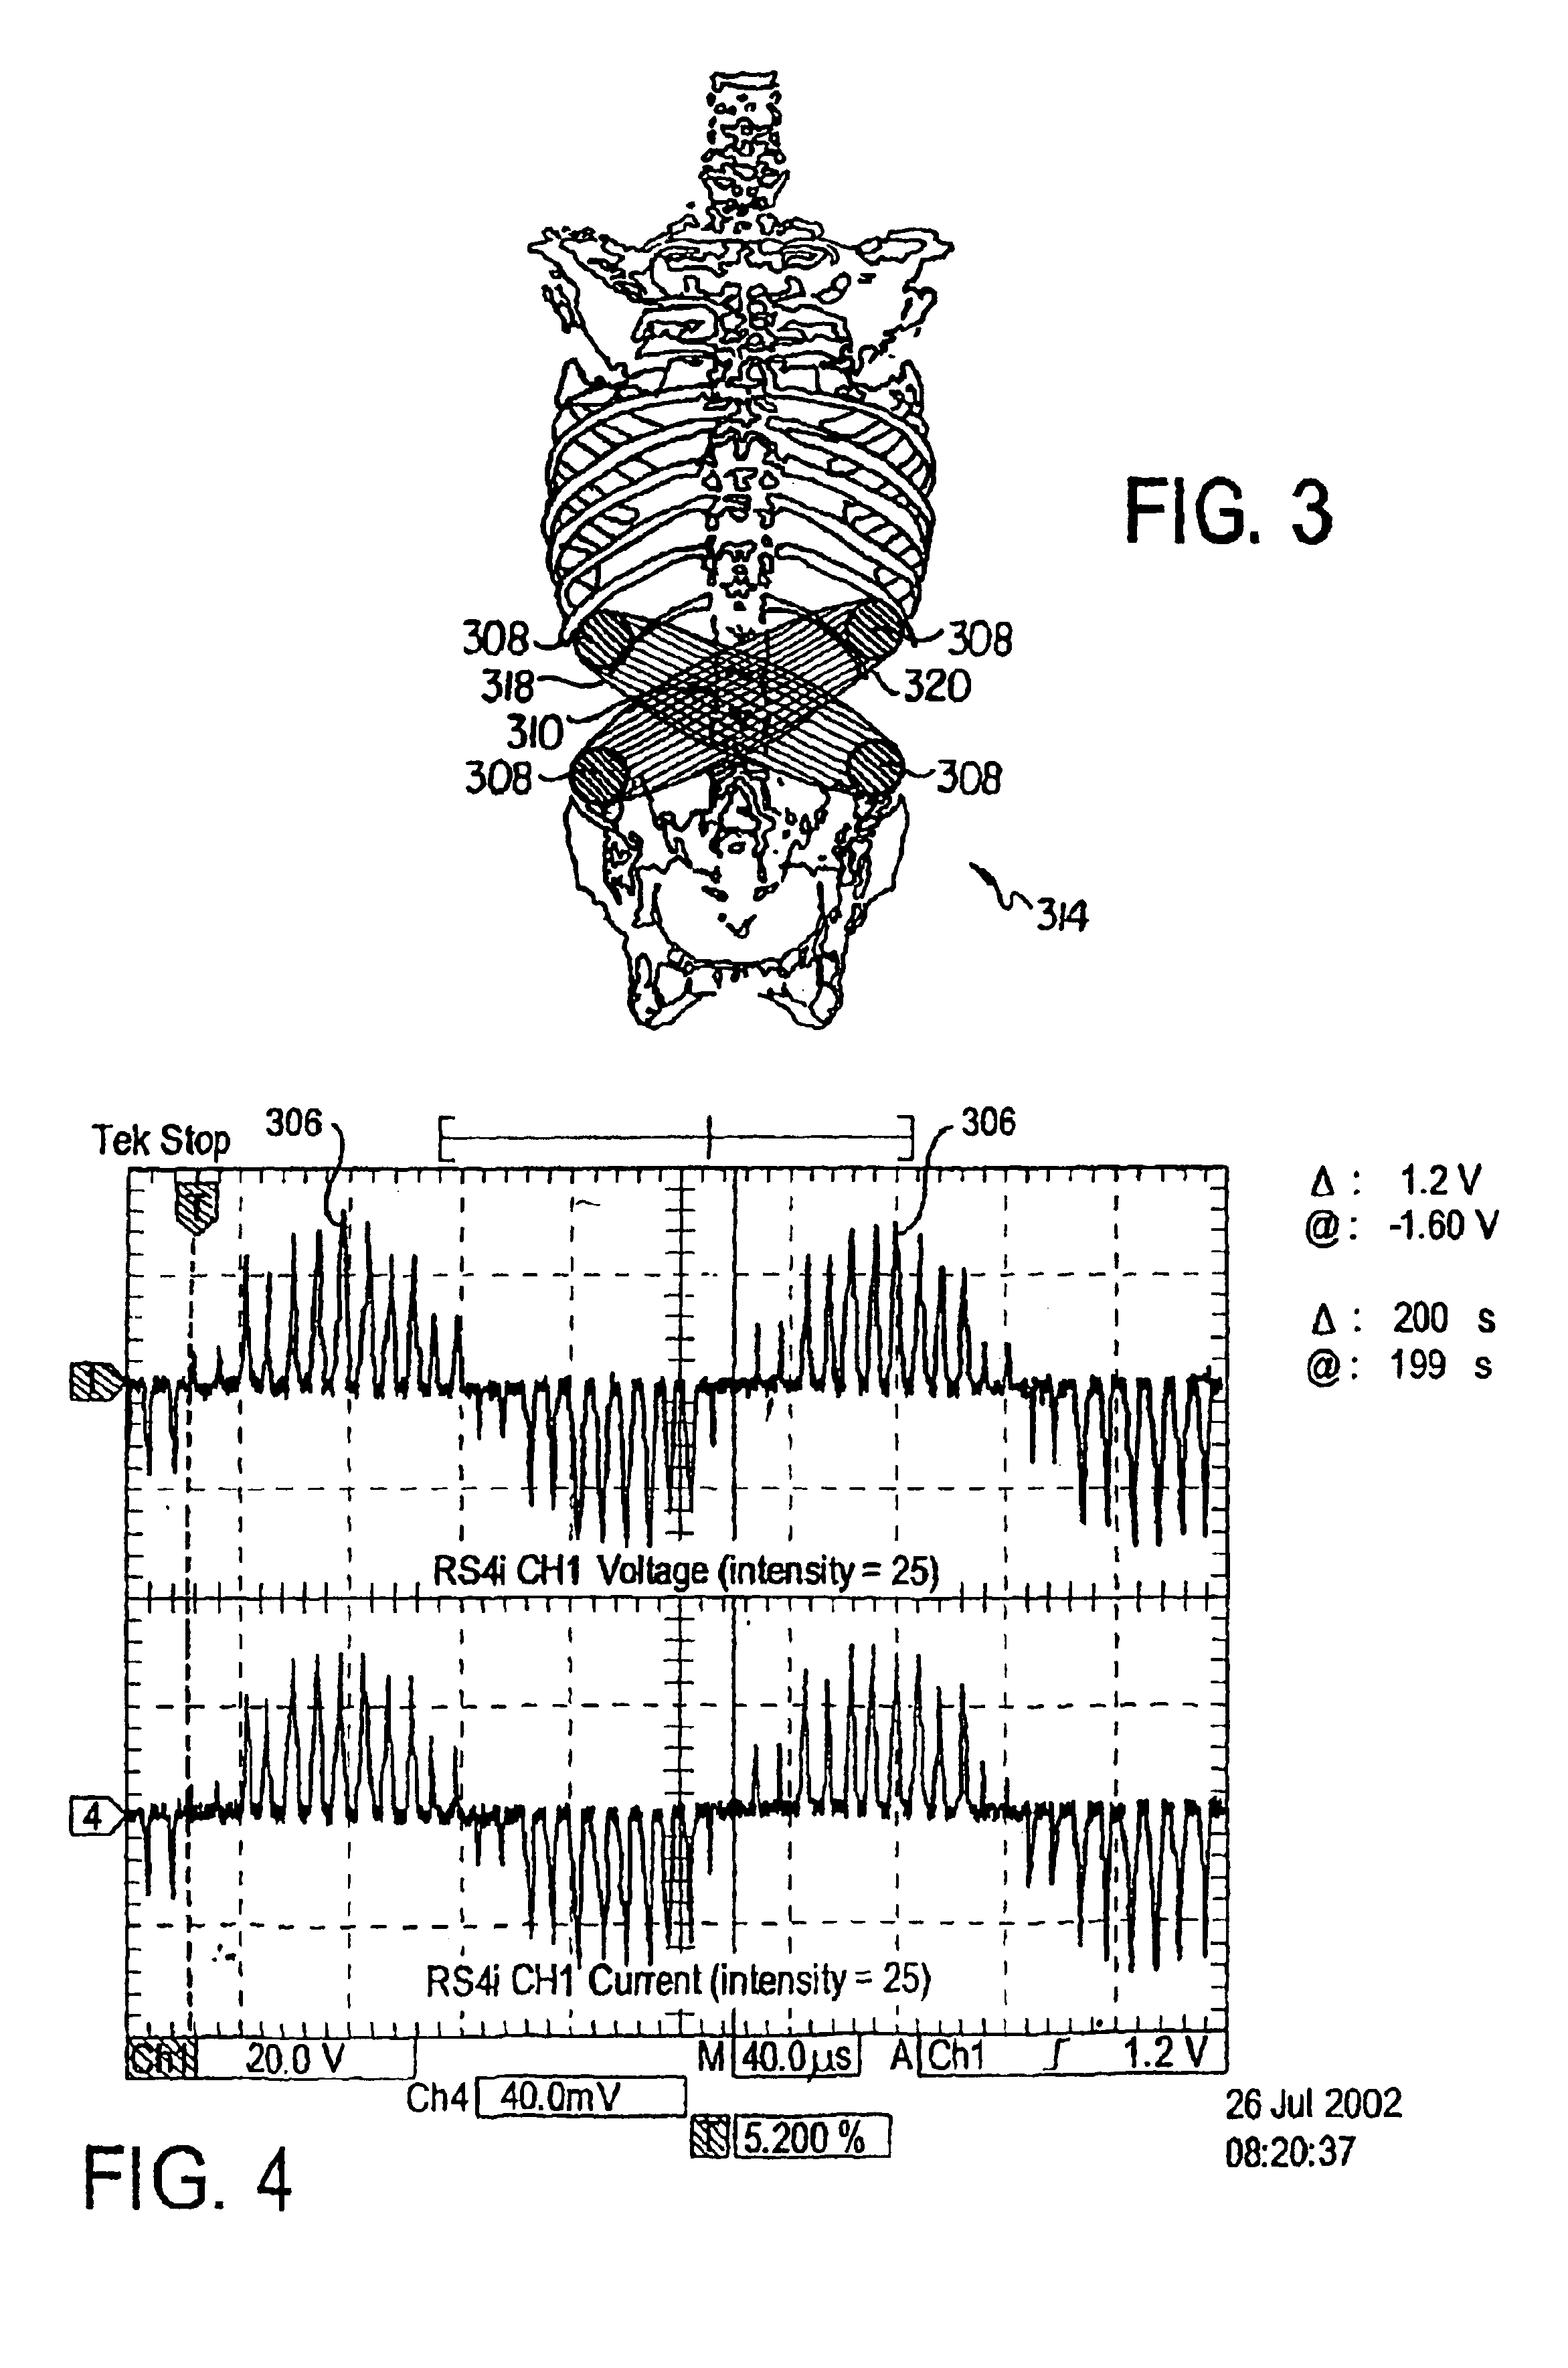 Osteogenesis stimulator with digital signal processing